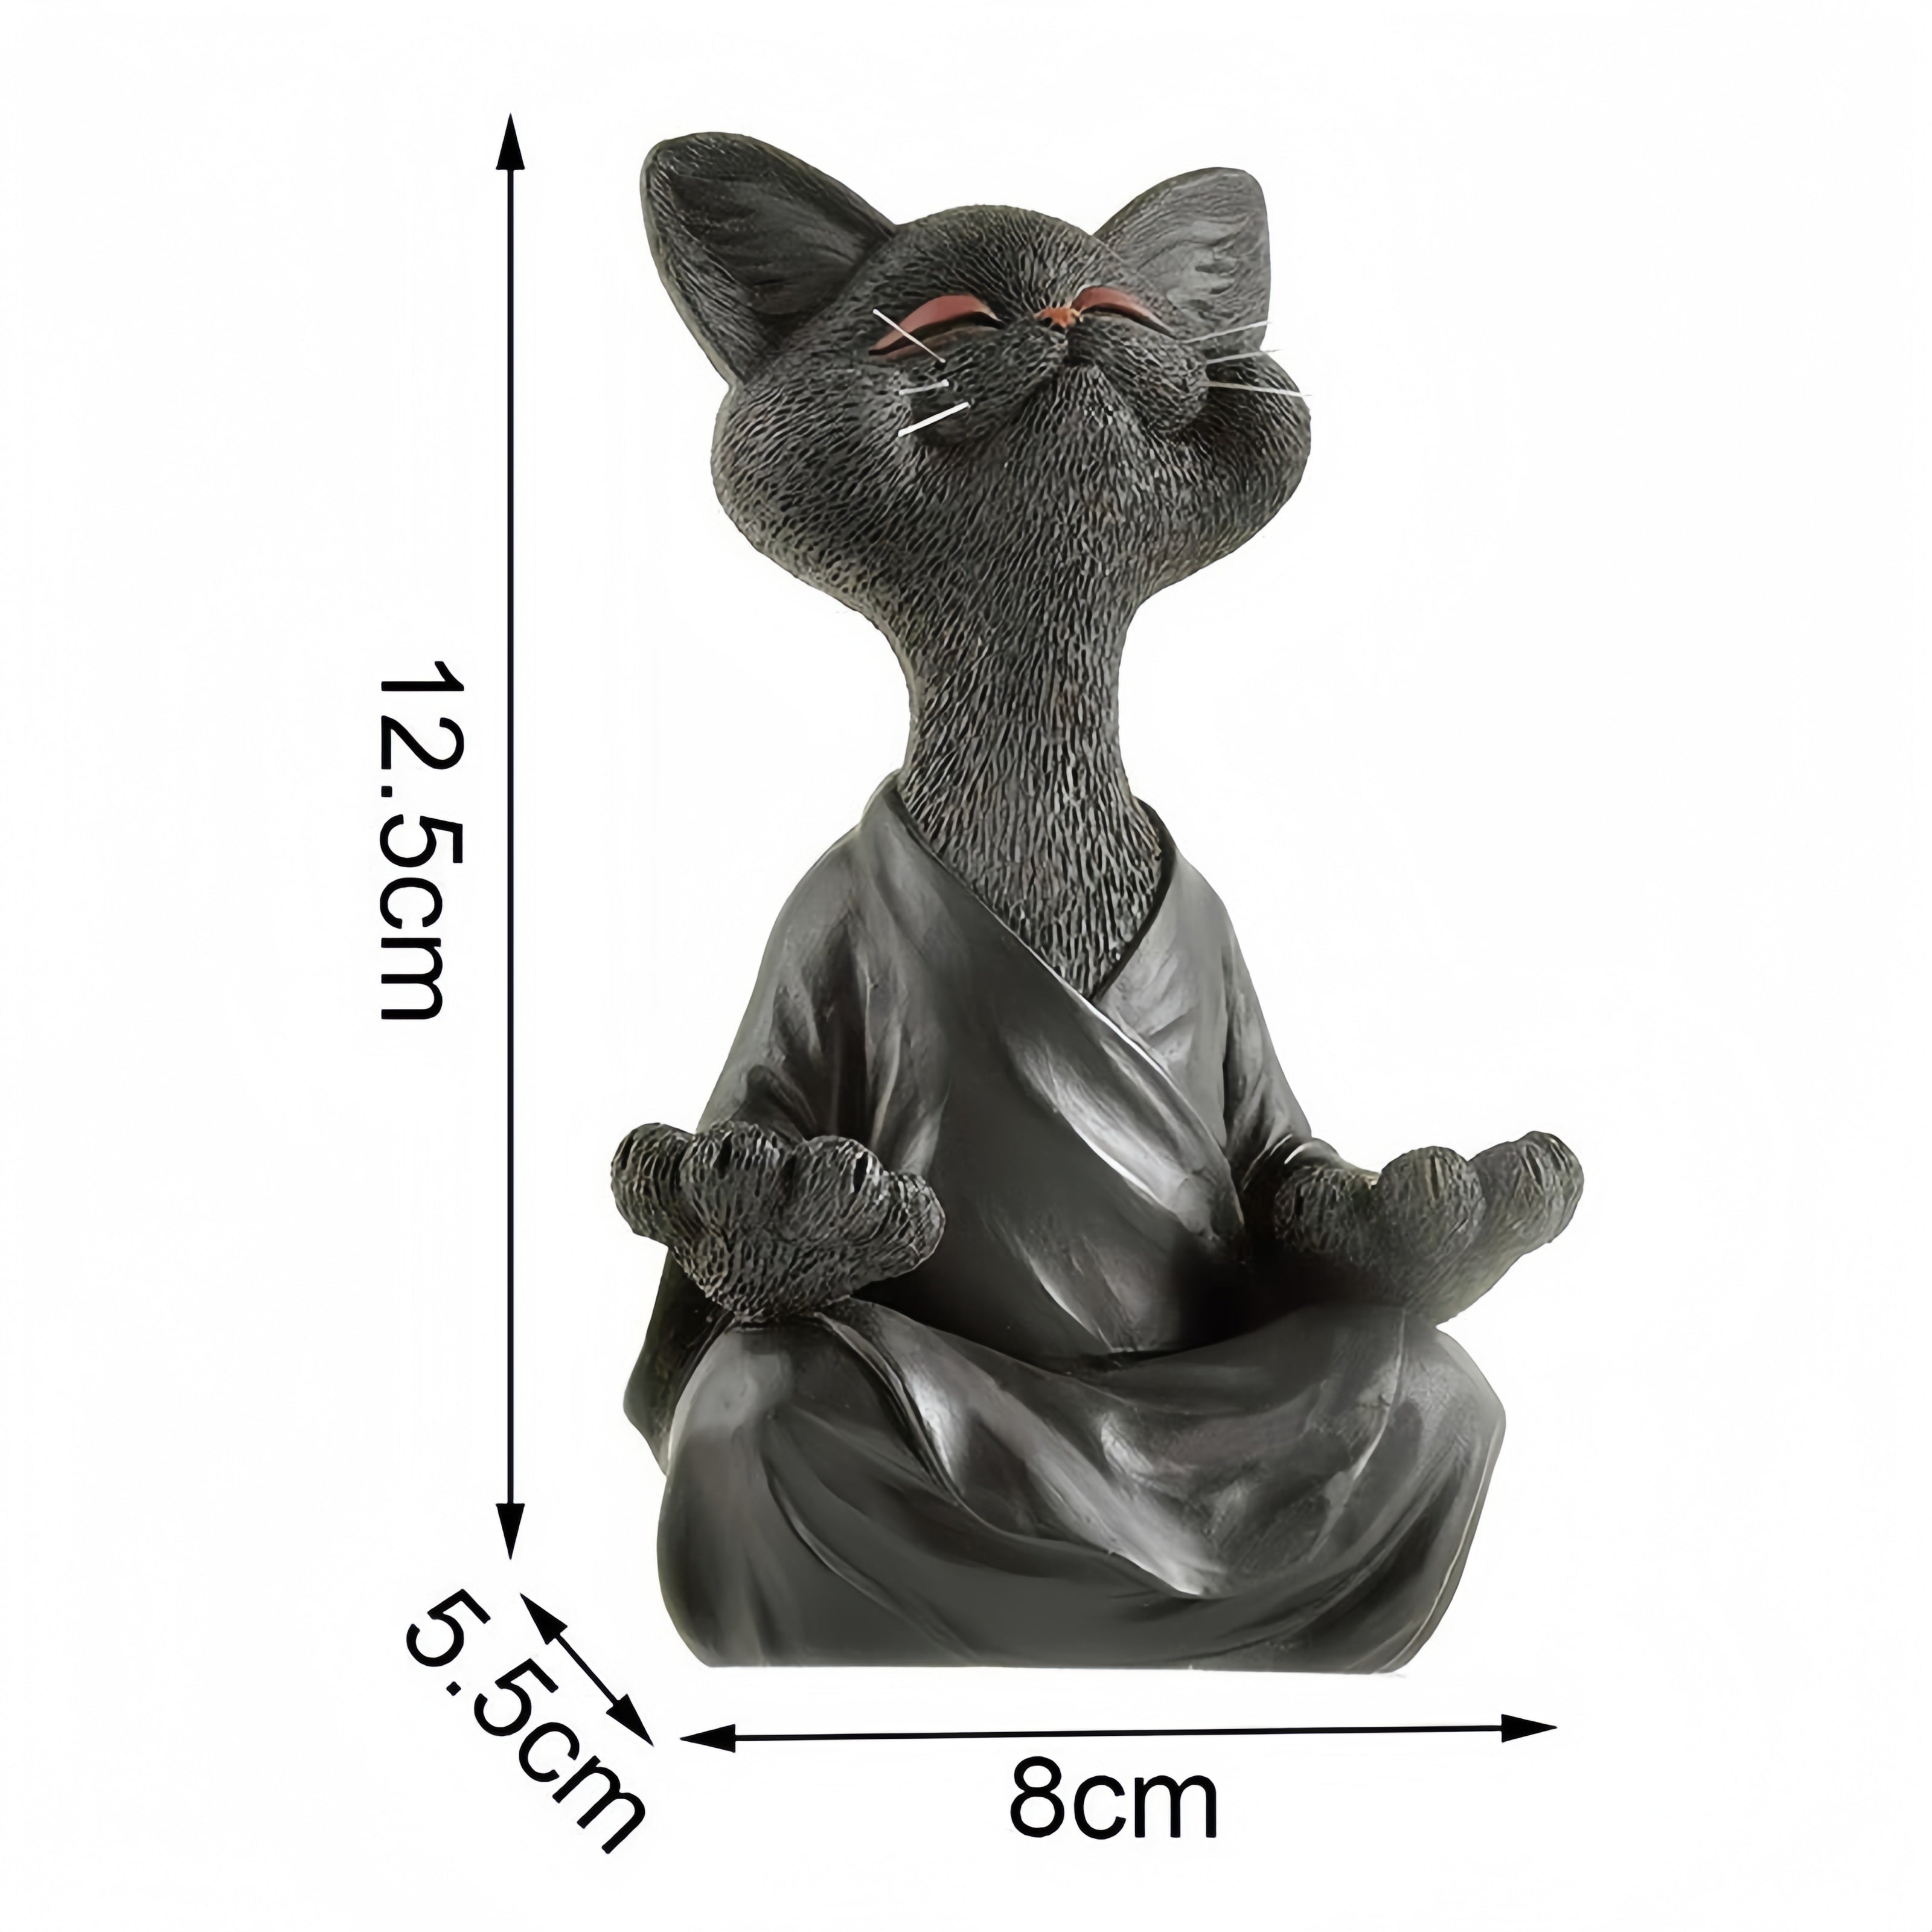 Dimensions of meditation cat statue